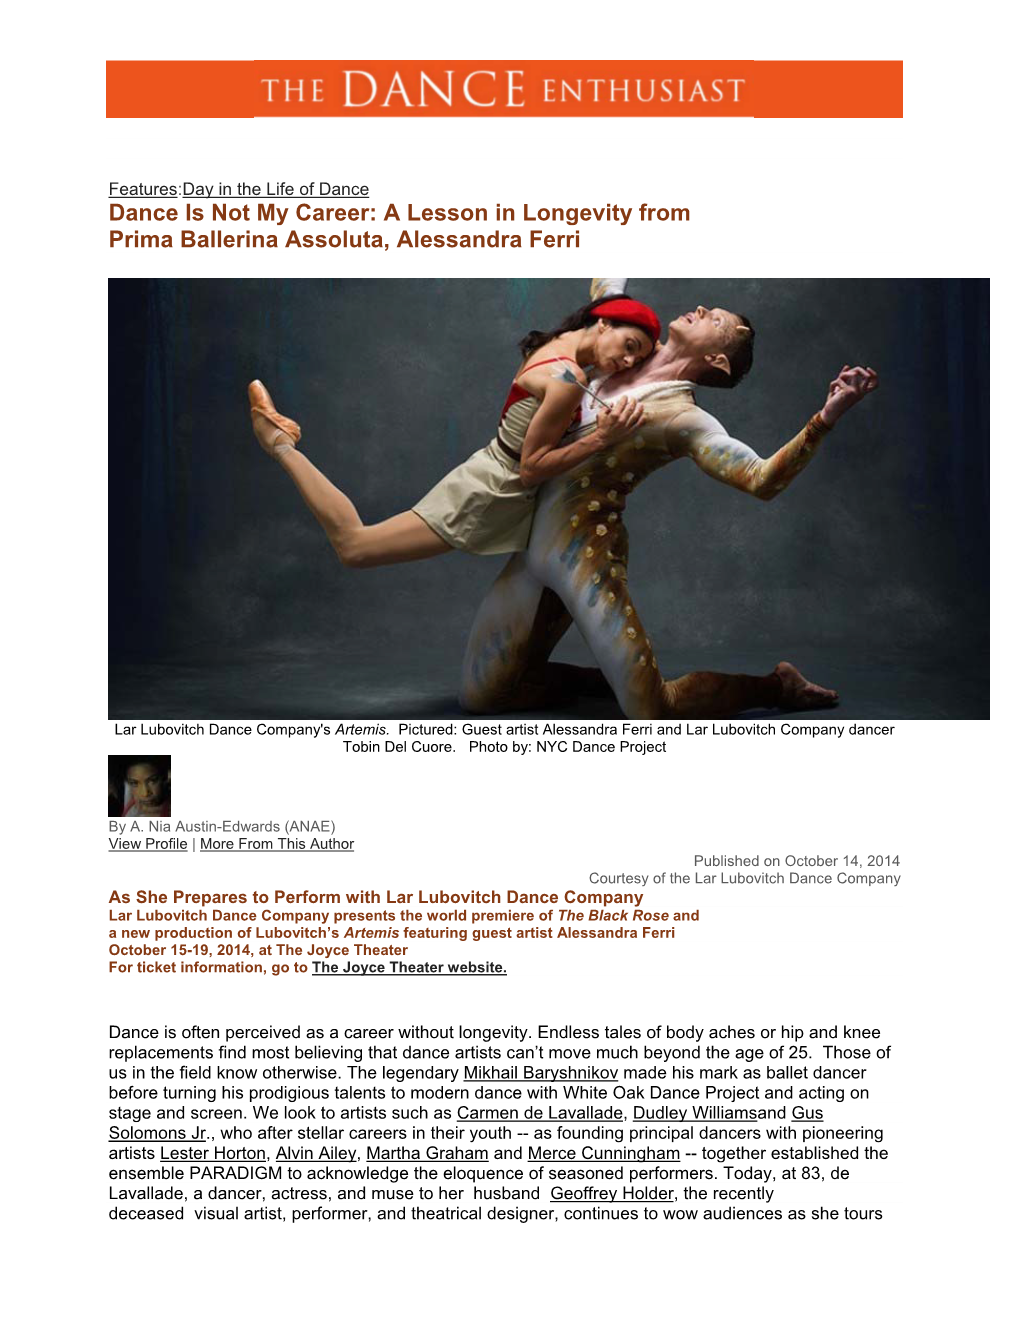 Dance Is Not My Career: a Lesson in Longevity from Prima Ballerina Assoluta, Alessandra Ferri